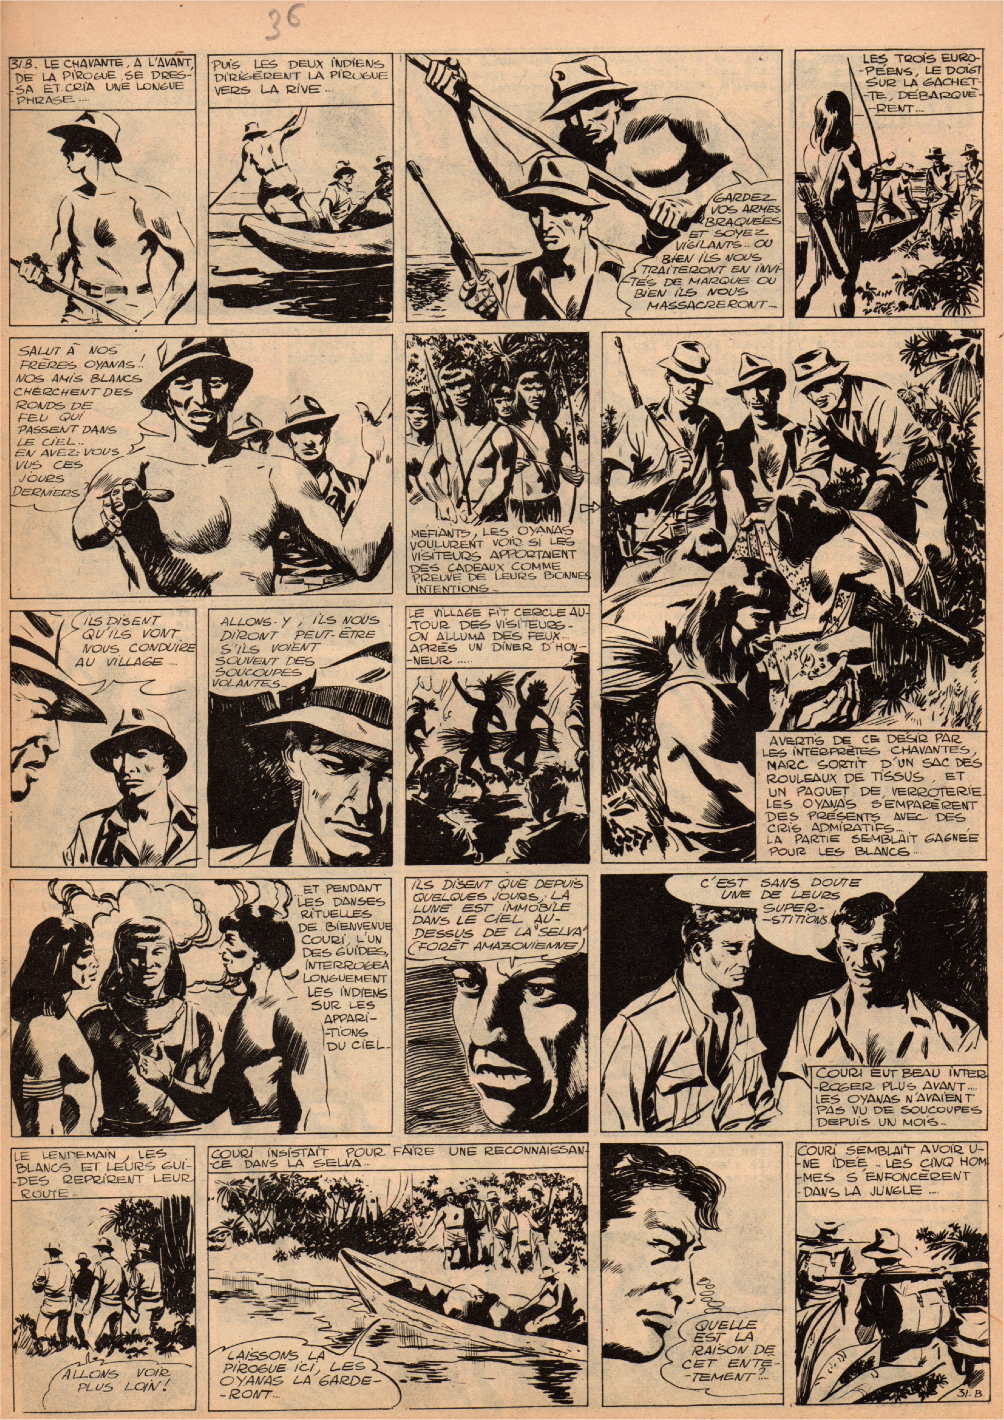 « Les Pirates de l’infini » - Zorro L’invincible n° 31 (2e trimestre 1953).